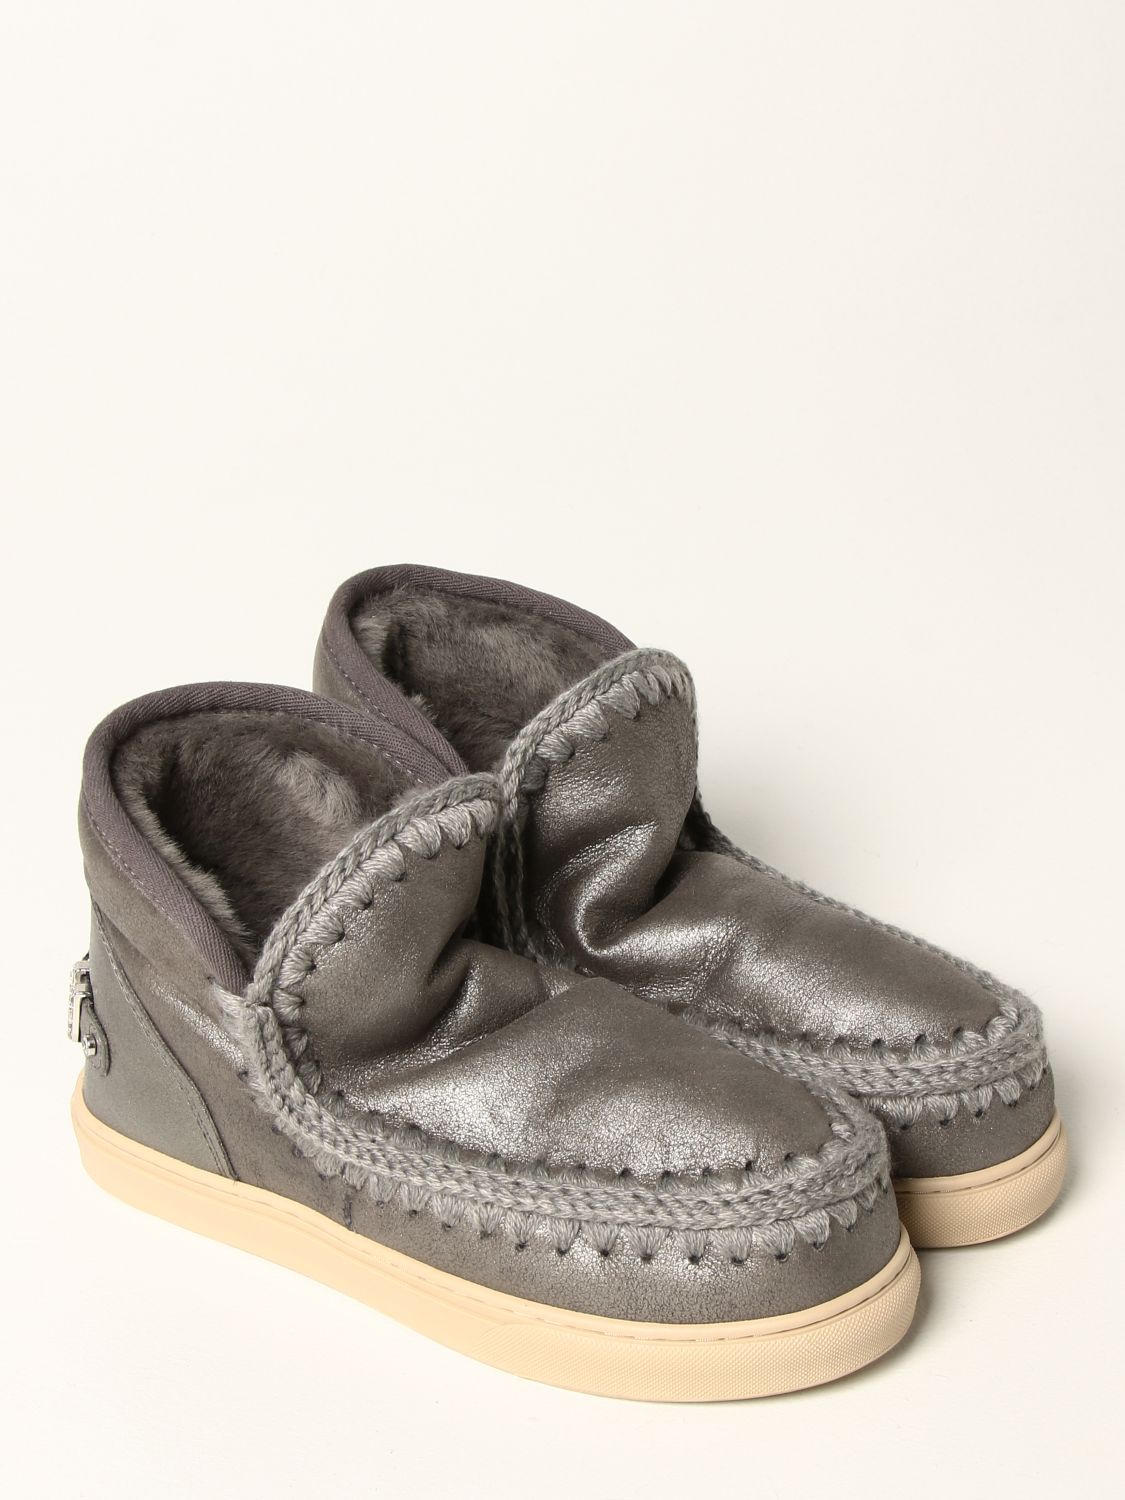 Flat ankle boots Mou: Shoes women Mou grey 2